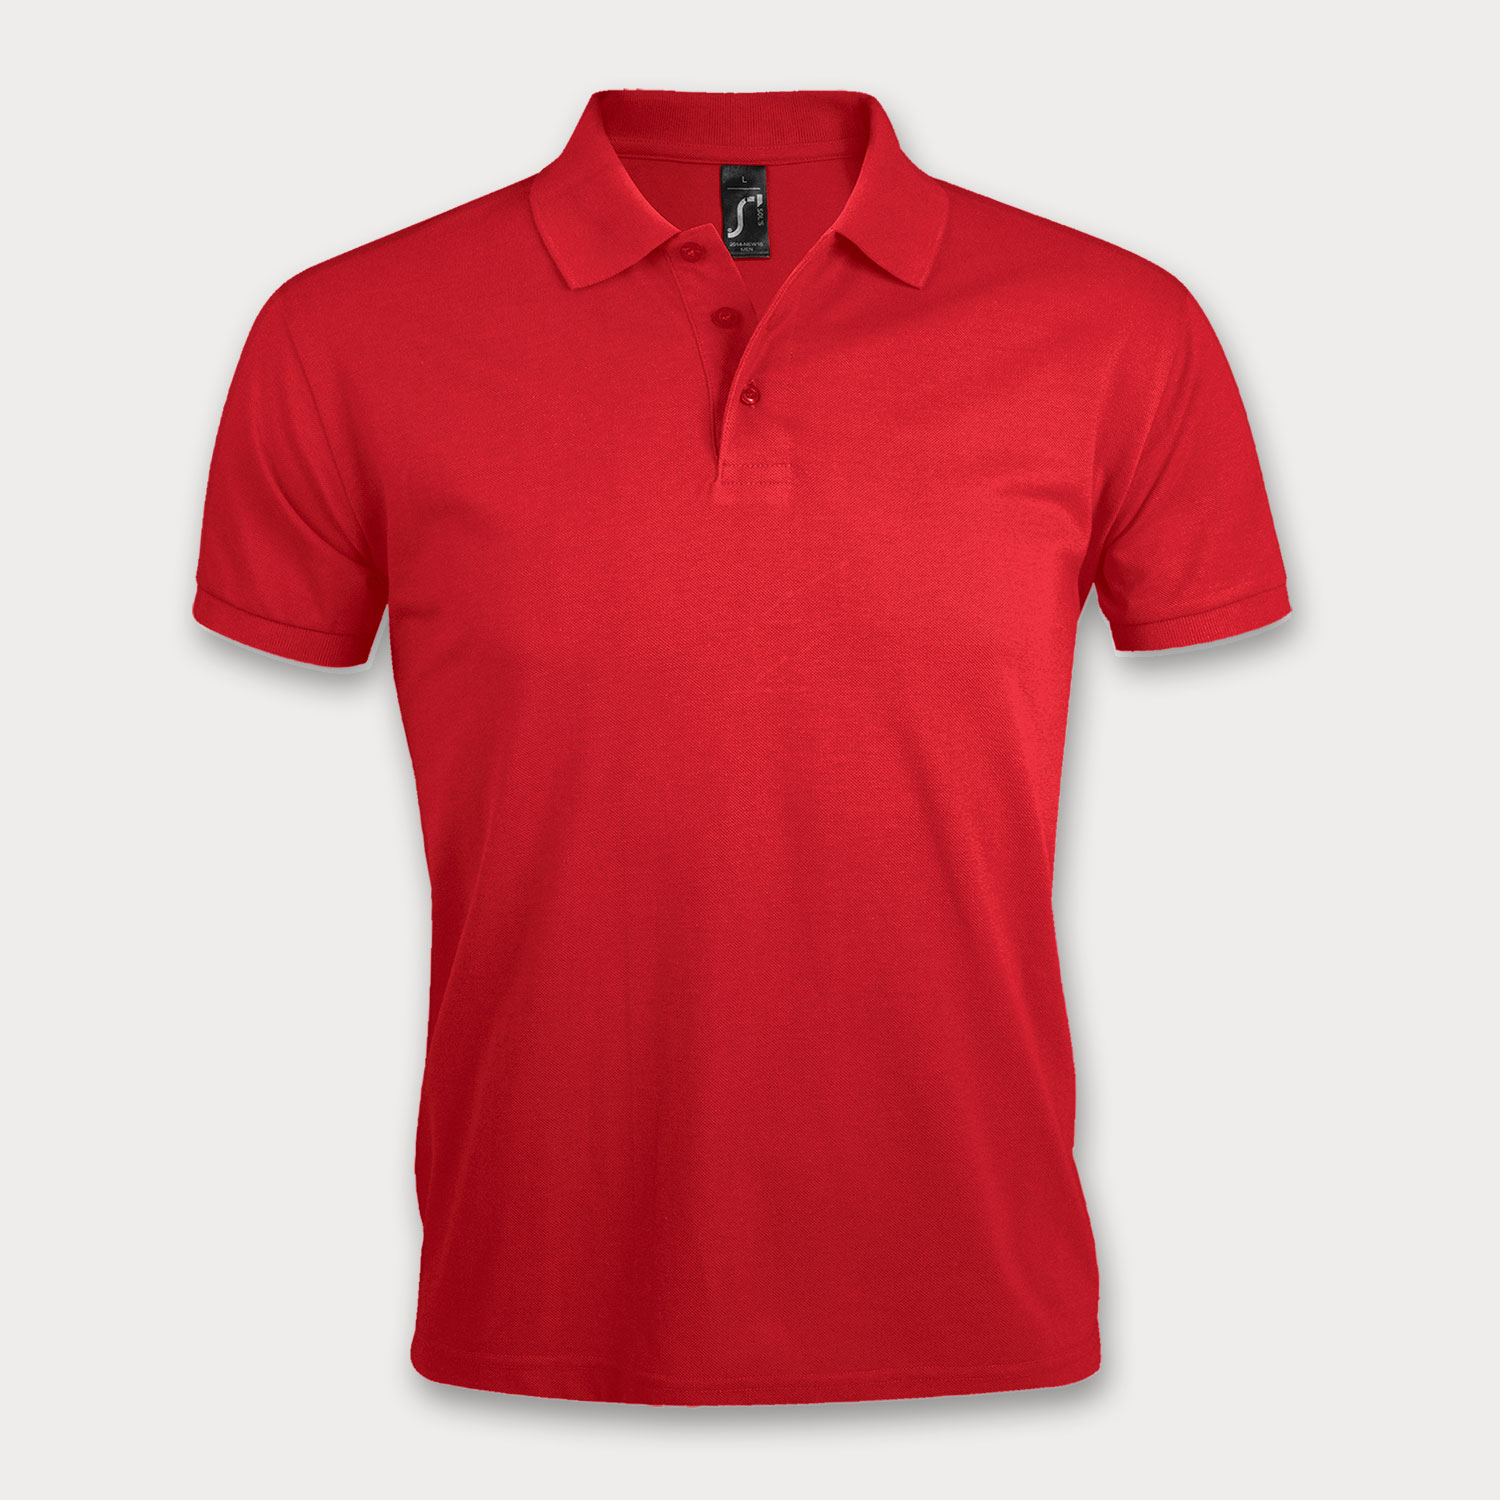 Uitpakken overschrijving hoek SOLS Prime Mens Polo Shirt | PrimoProducts